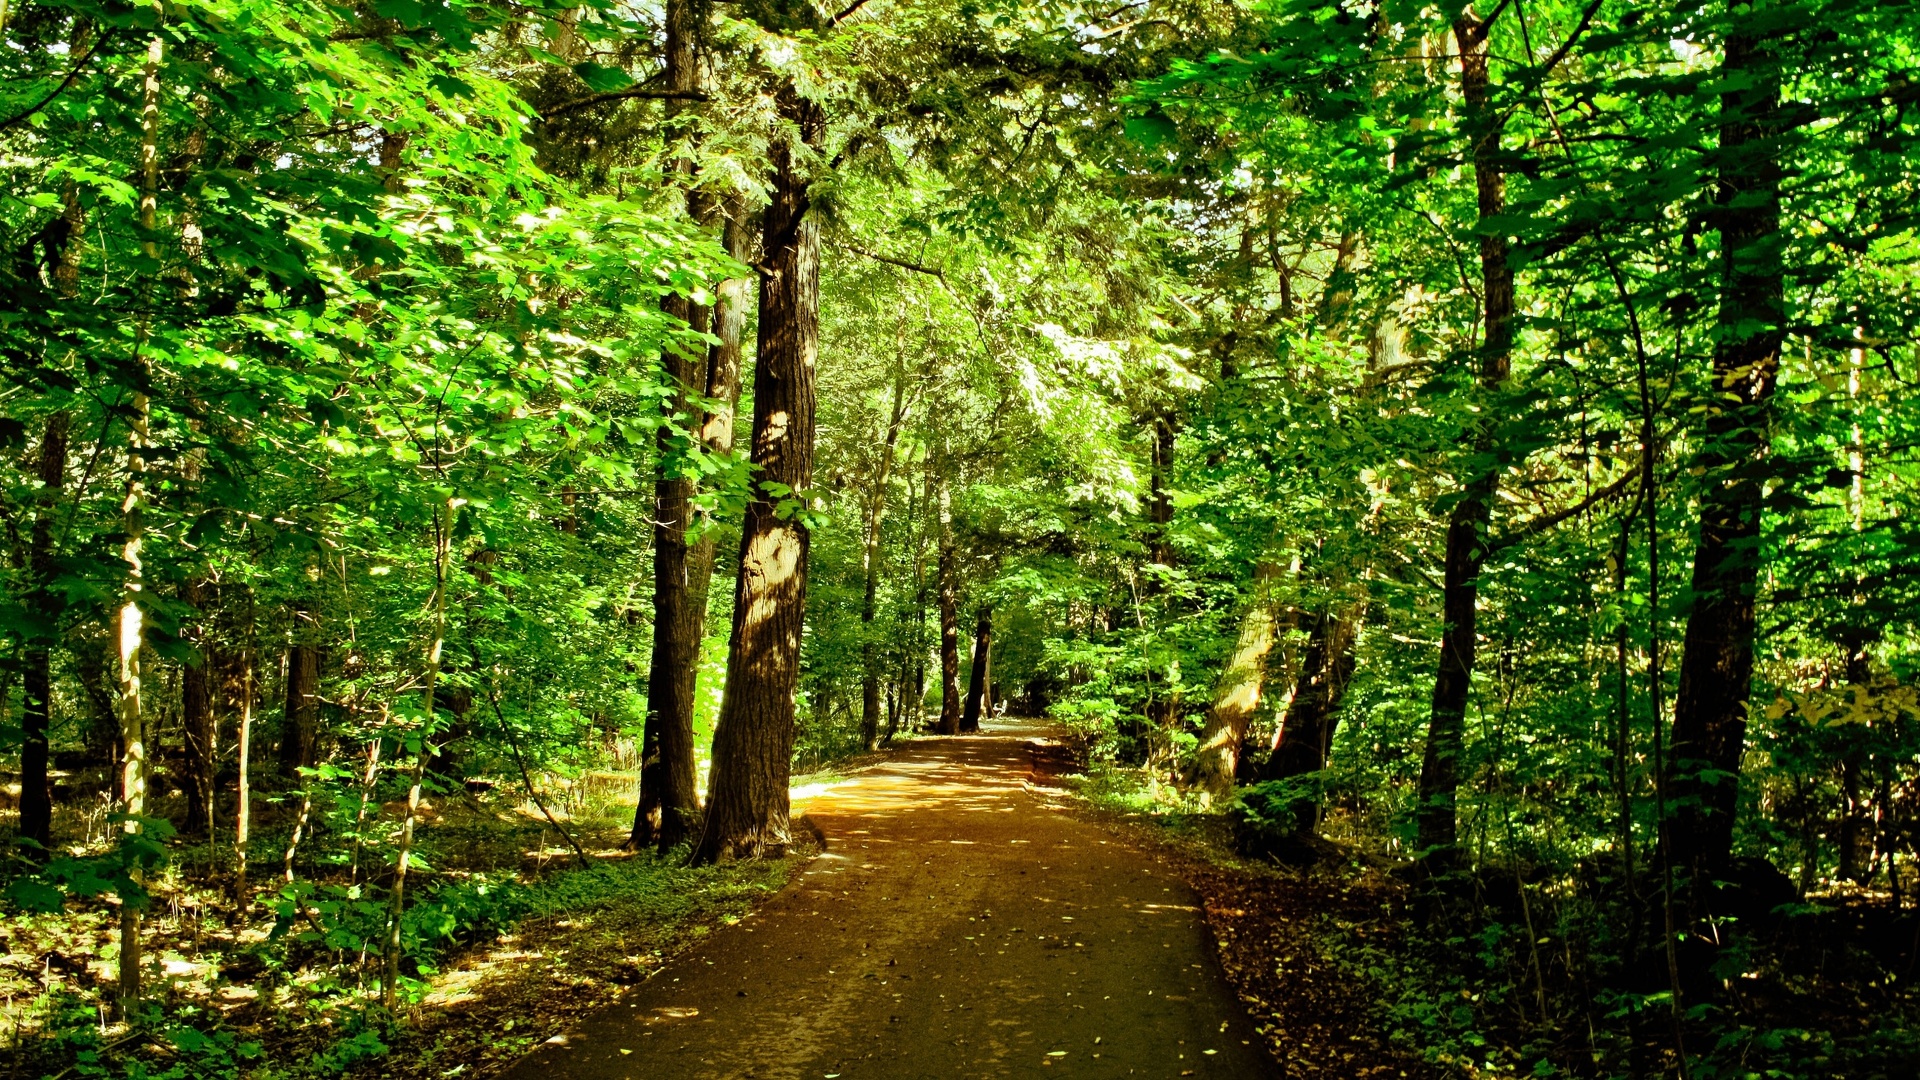 Chemin dans la forêt - wallpaper.jpg